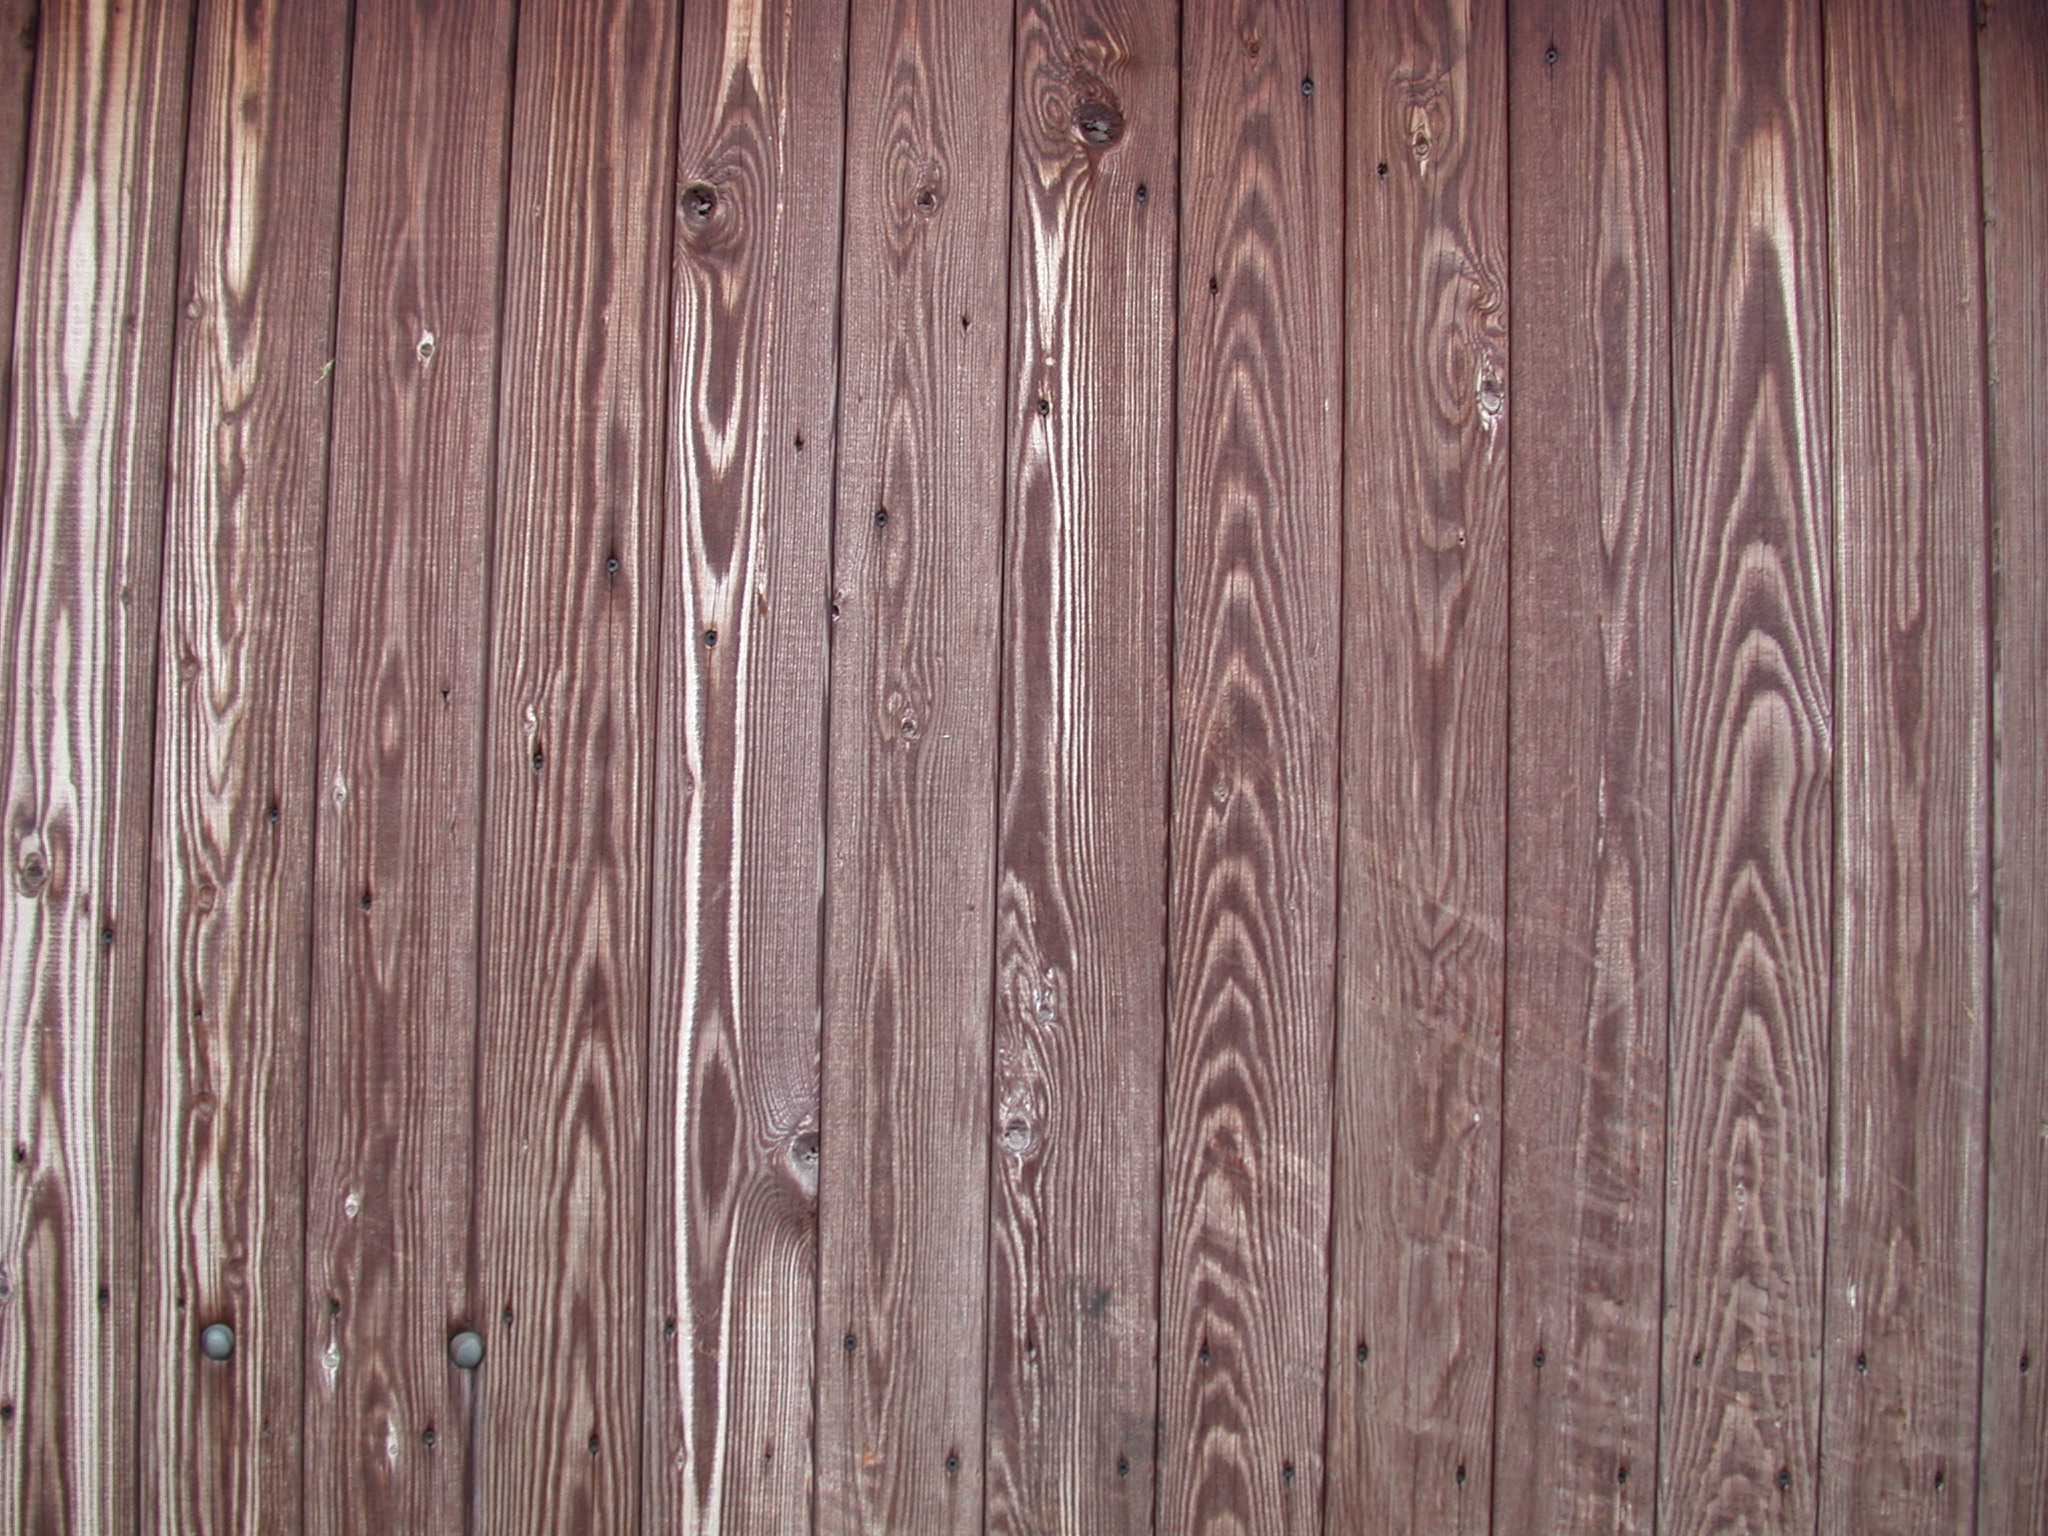 zebra wood texture